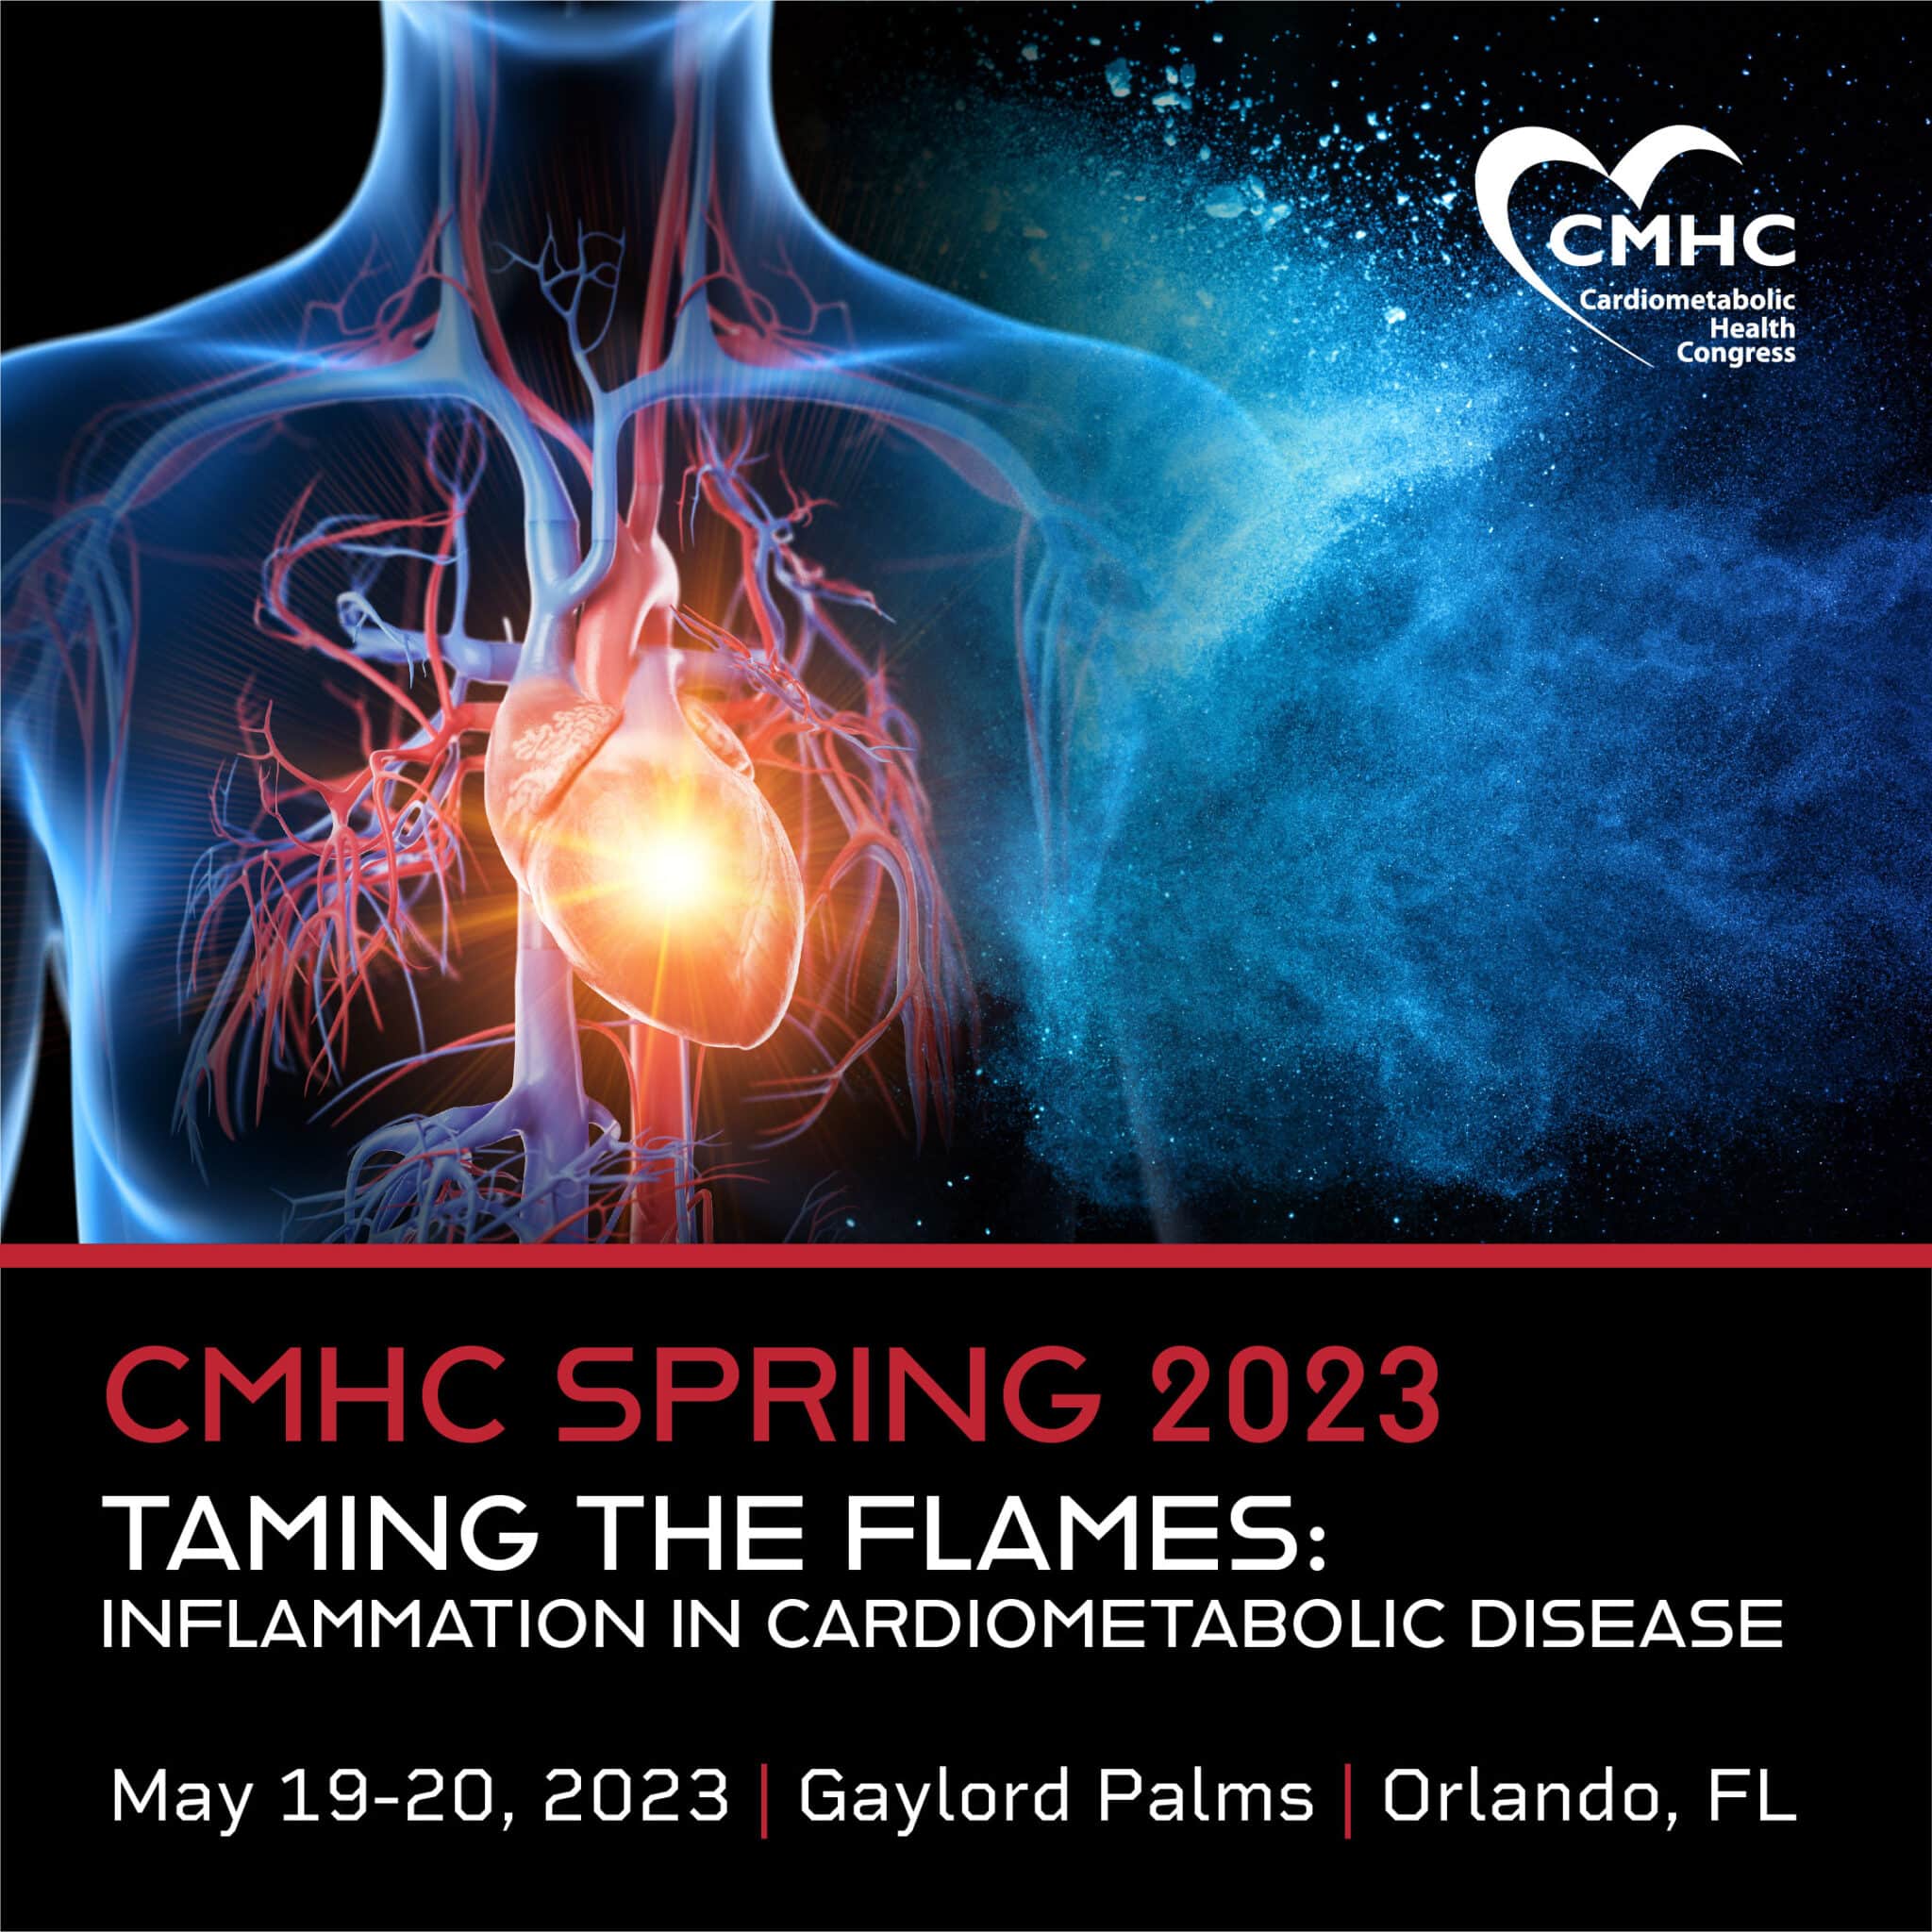 2023 CMHC Spring Registration Attendee Cardiometabolic Health Congress